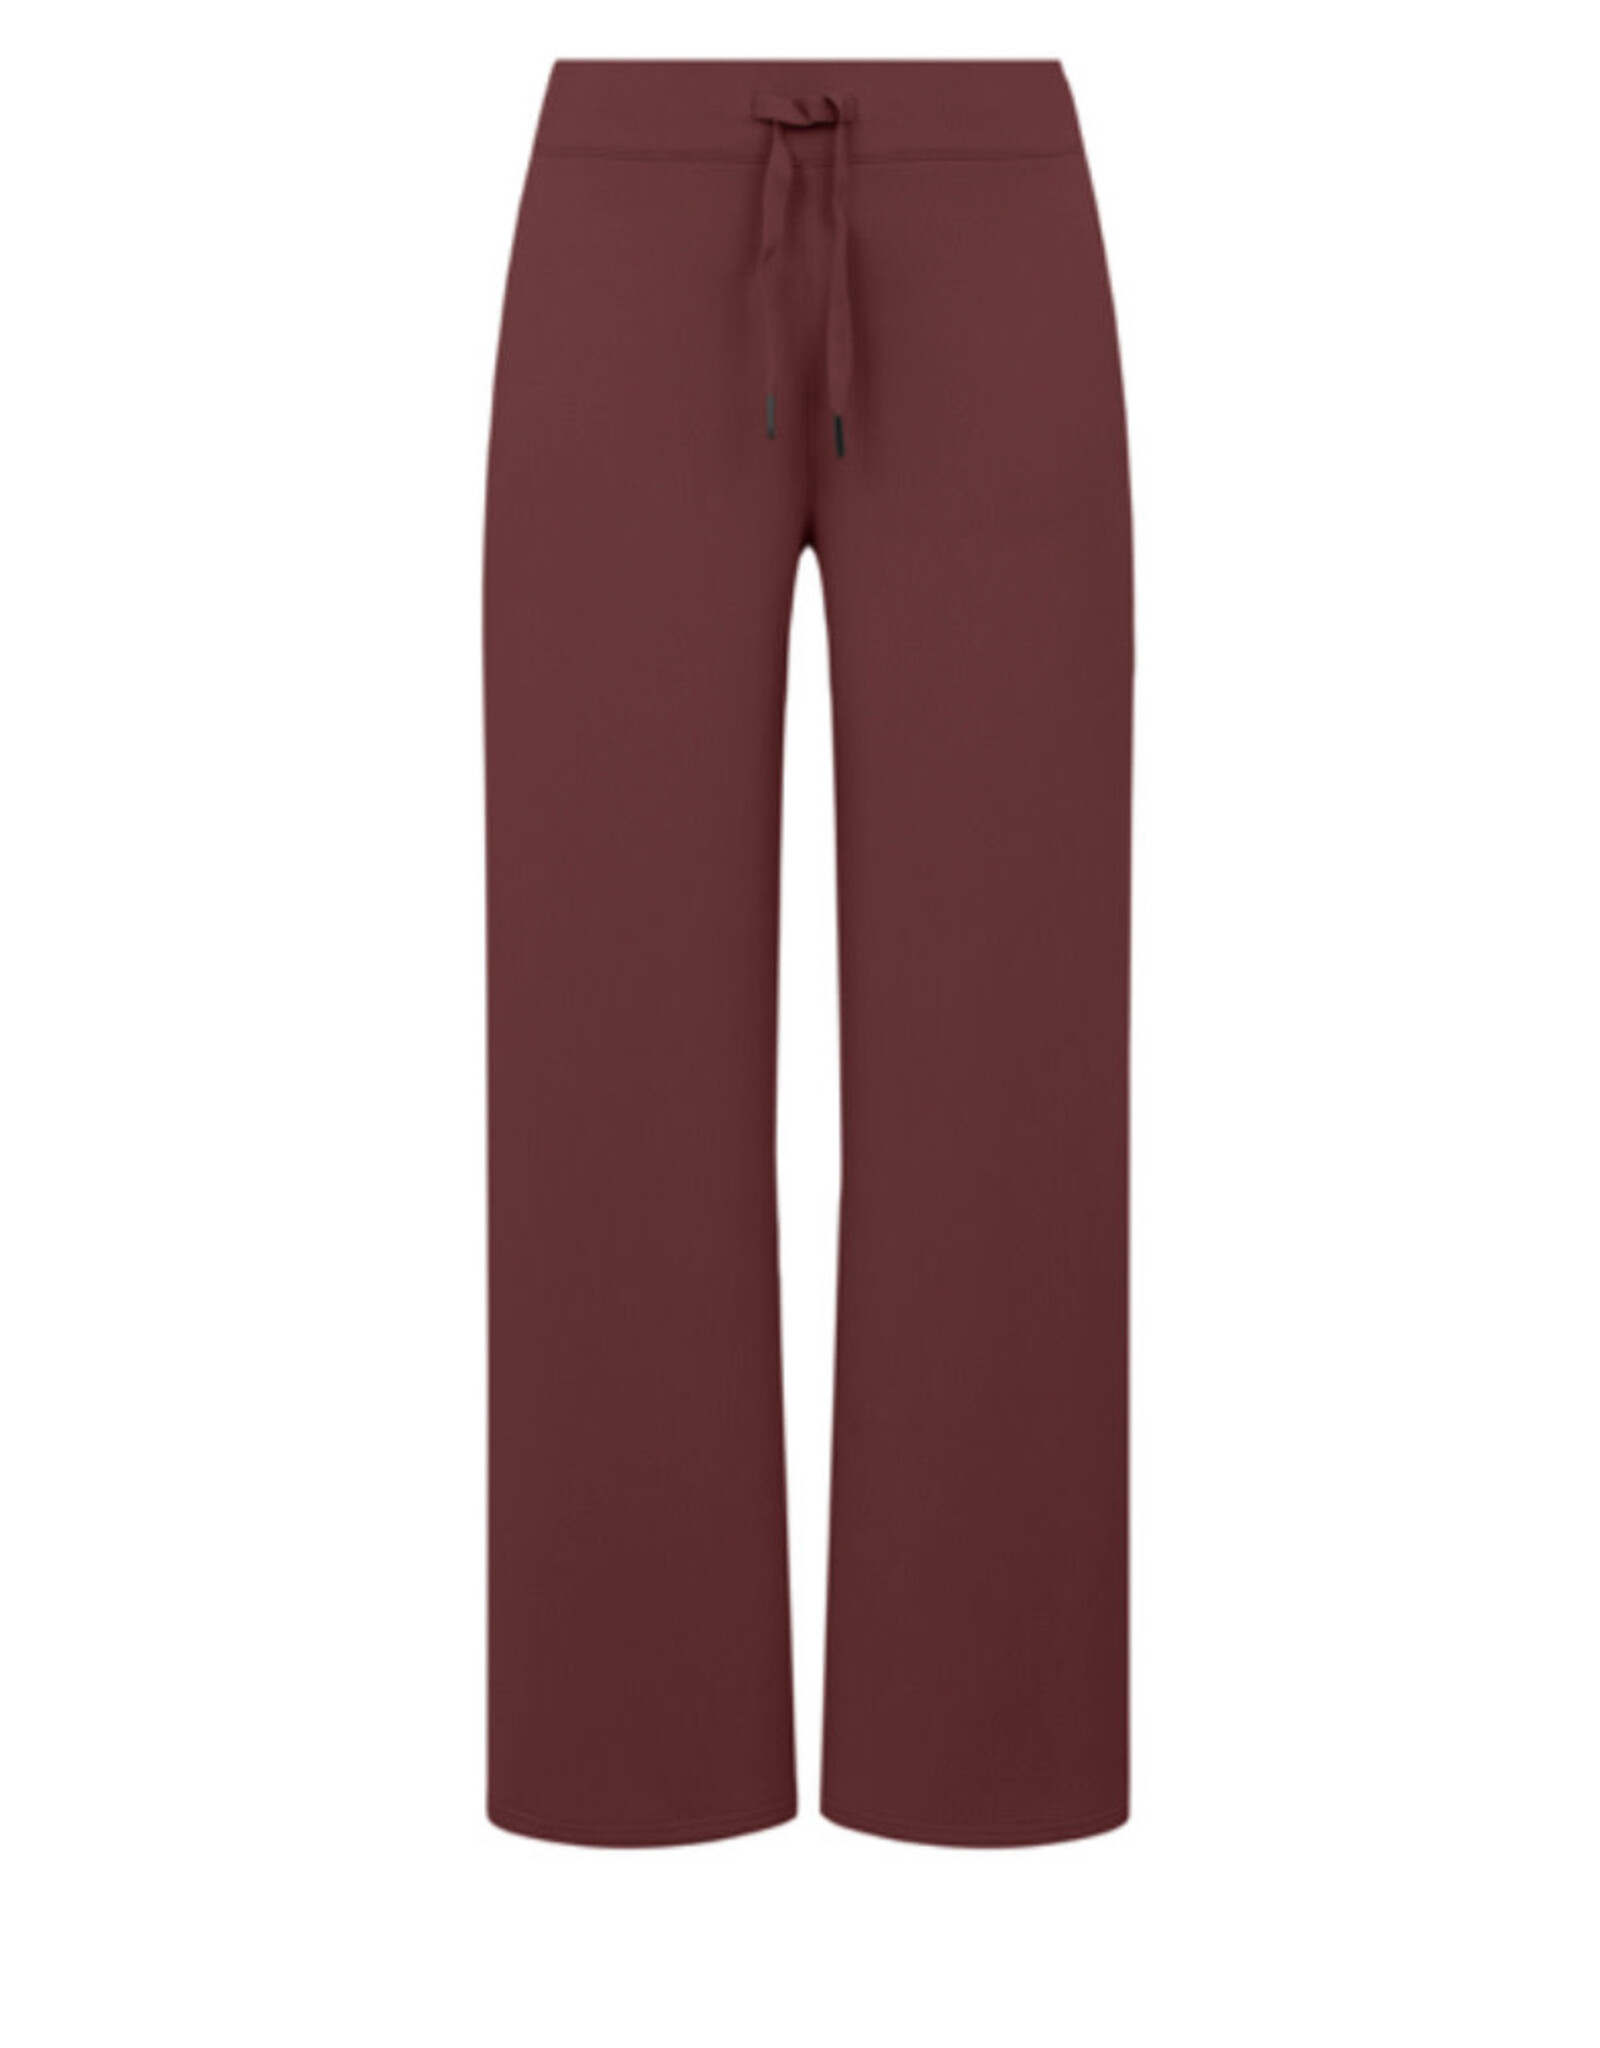 SPANX Burgundy Active Pants Size XL - 43% off